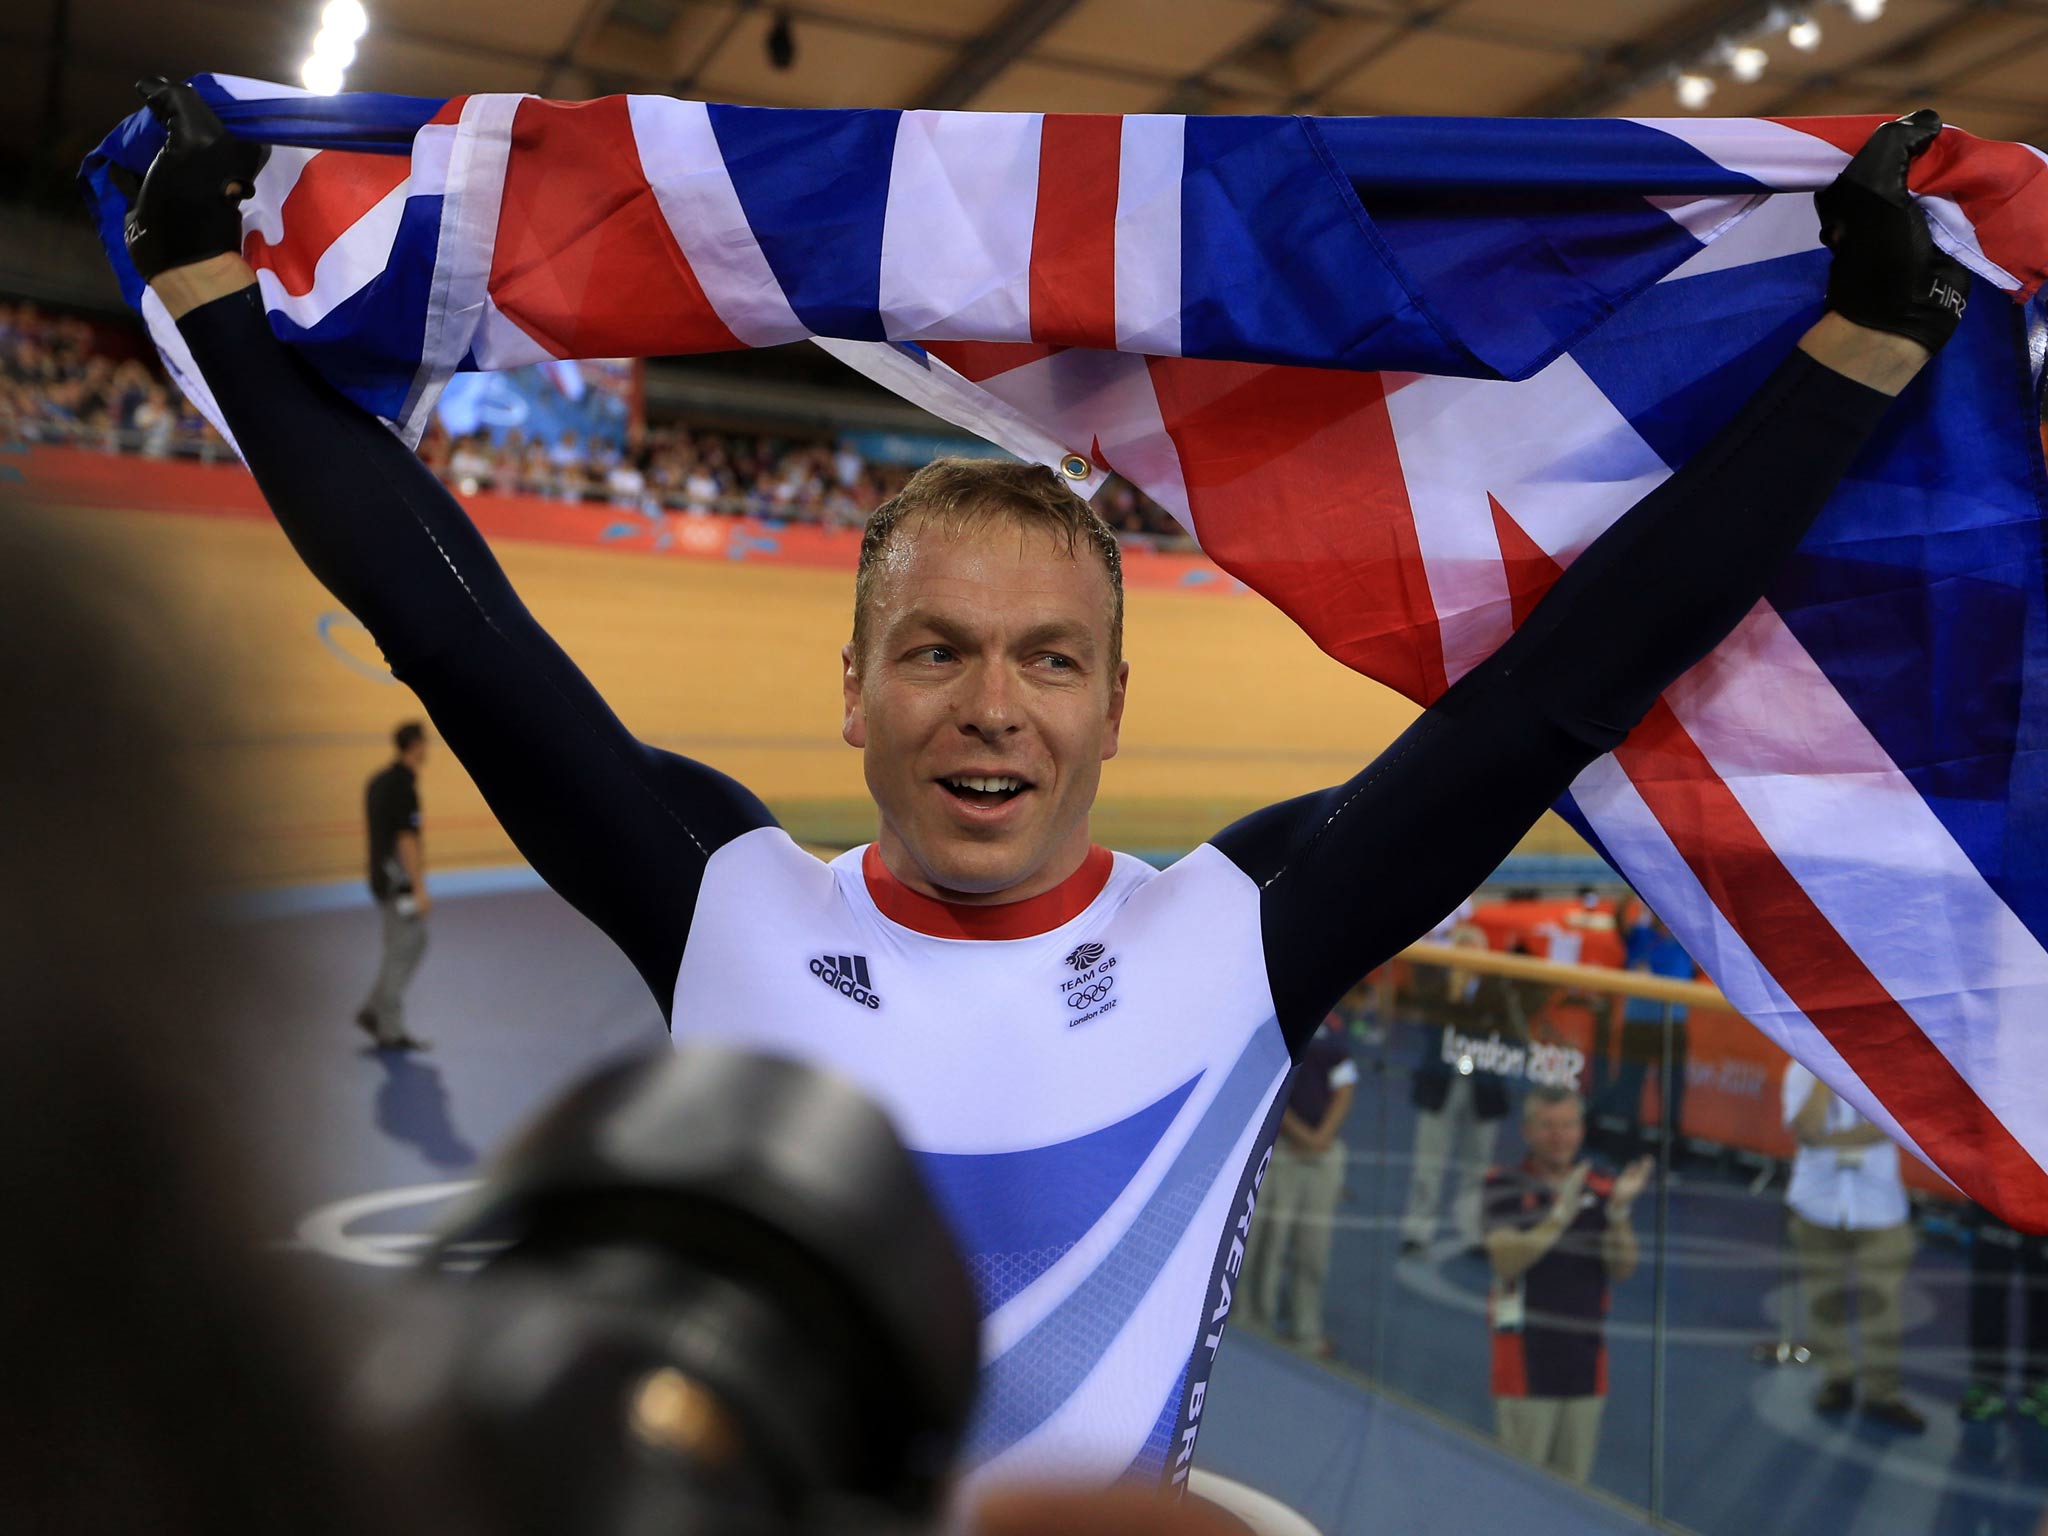 Sir Chris Hoy celebrates at the London 2012 Olympics